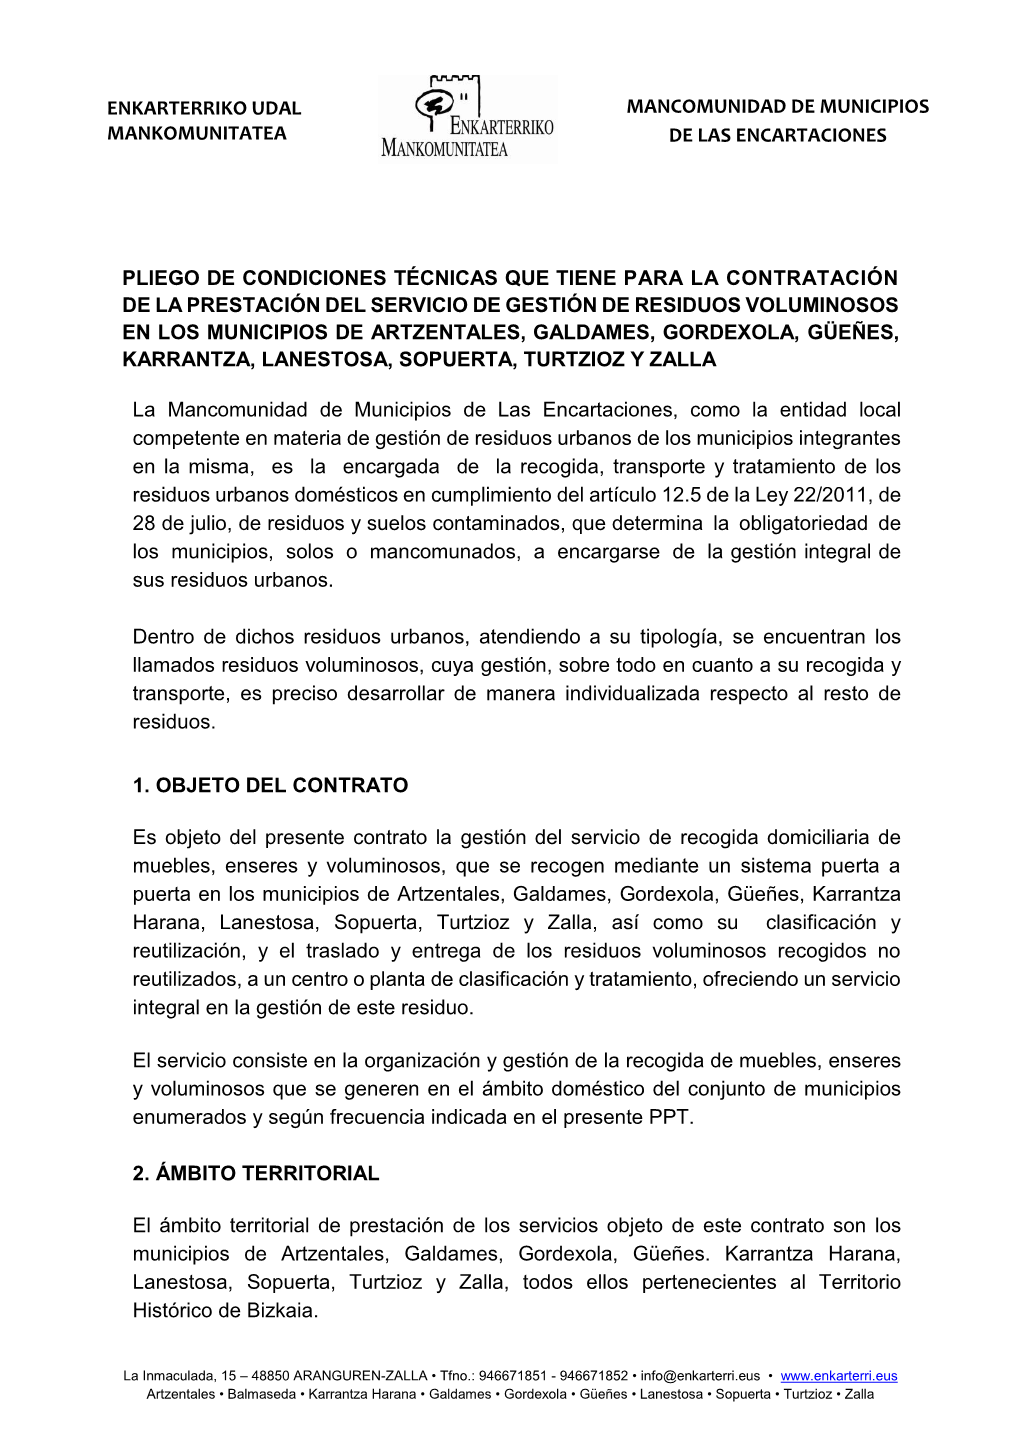 Enkarterriko Udal Mankomunitatea Mancomunidad De Municipios De